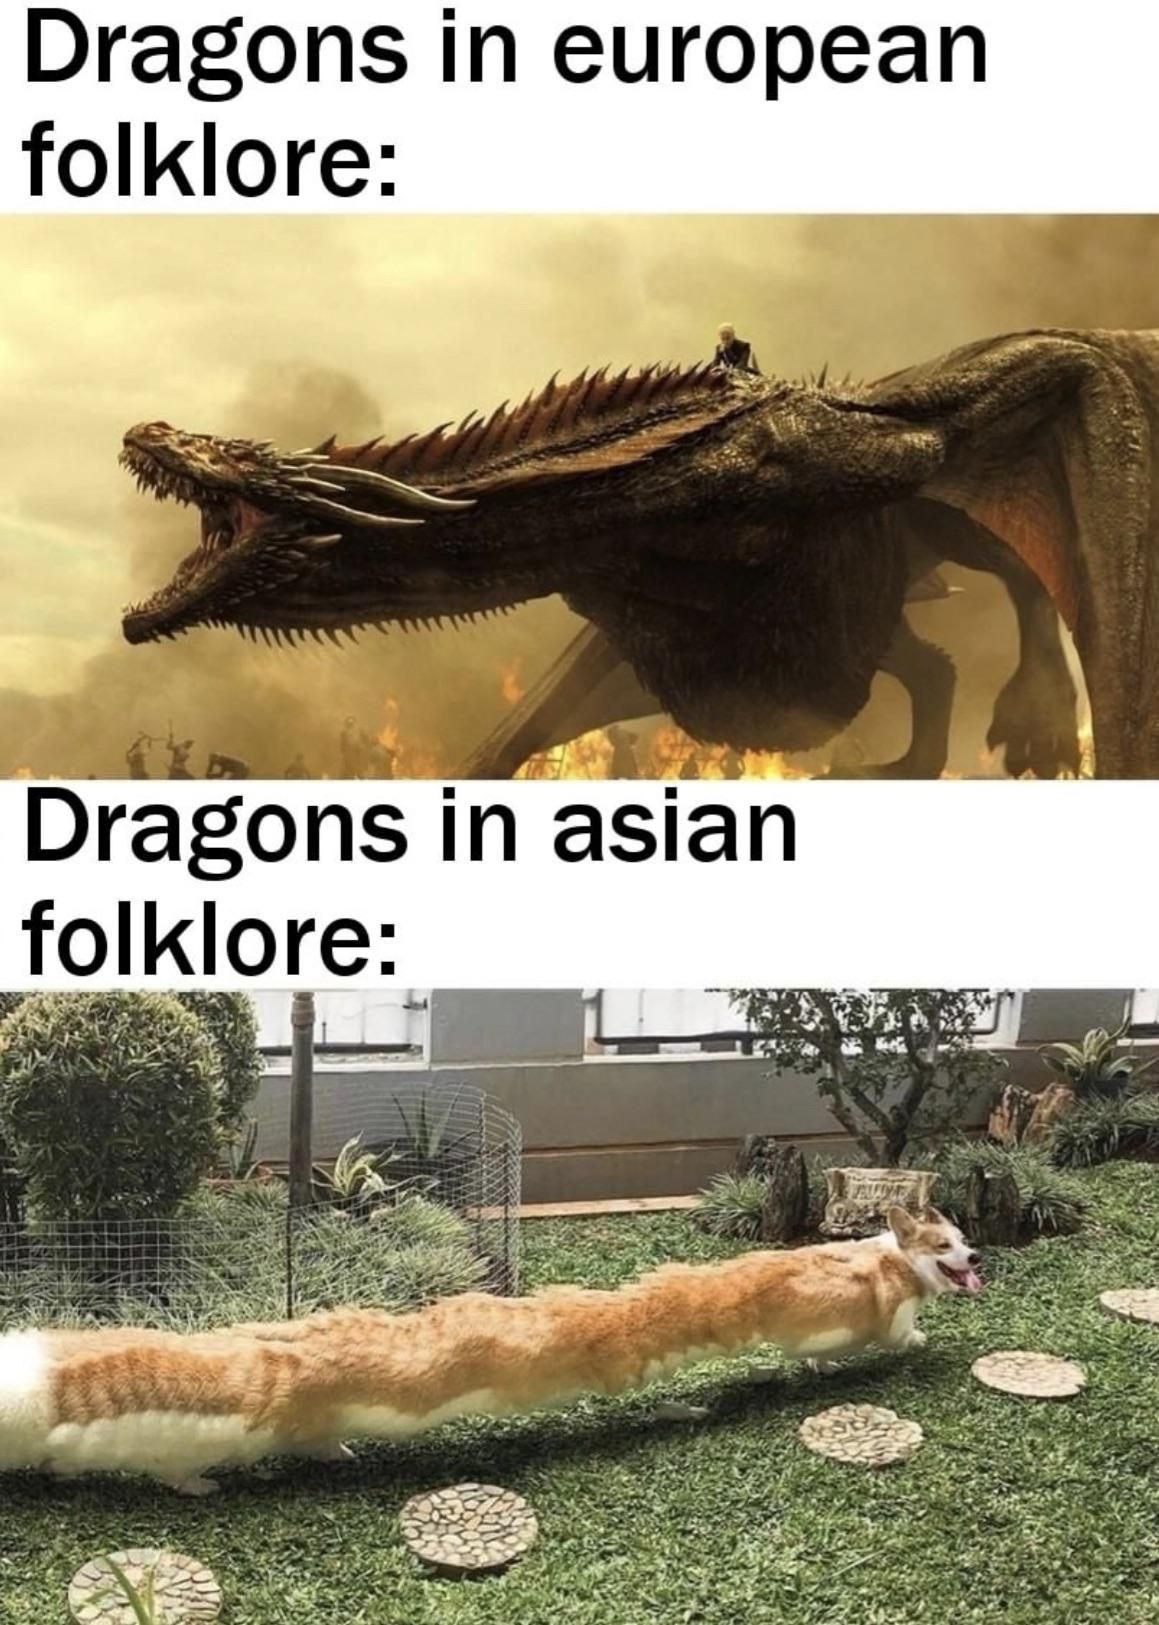 Europe vs Asia: Dragons